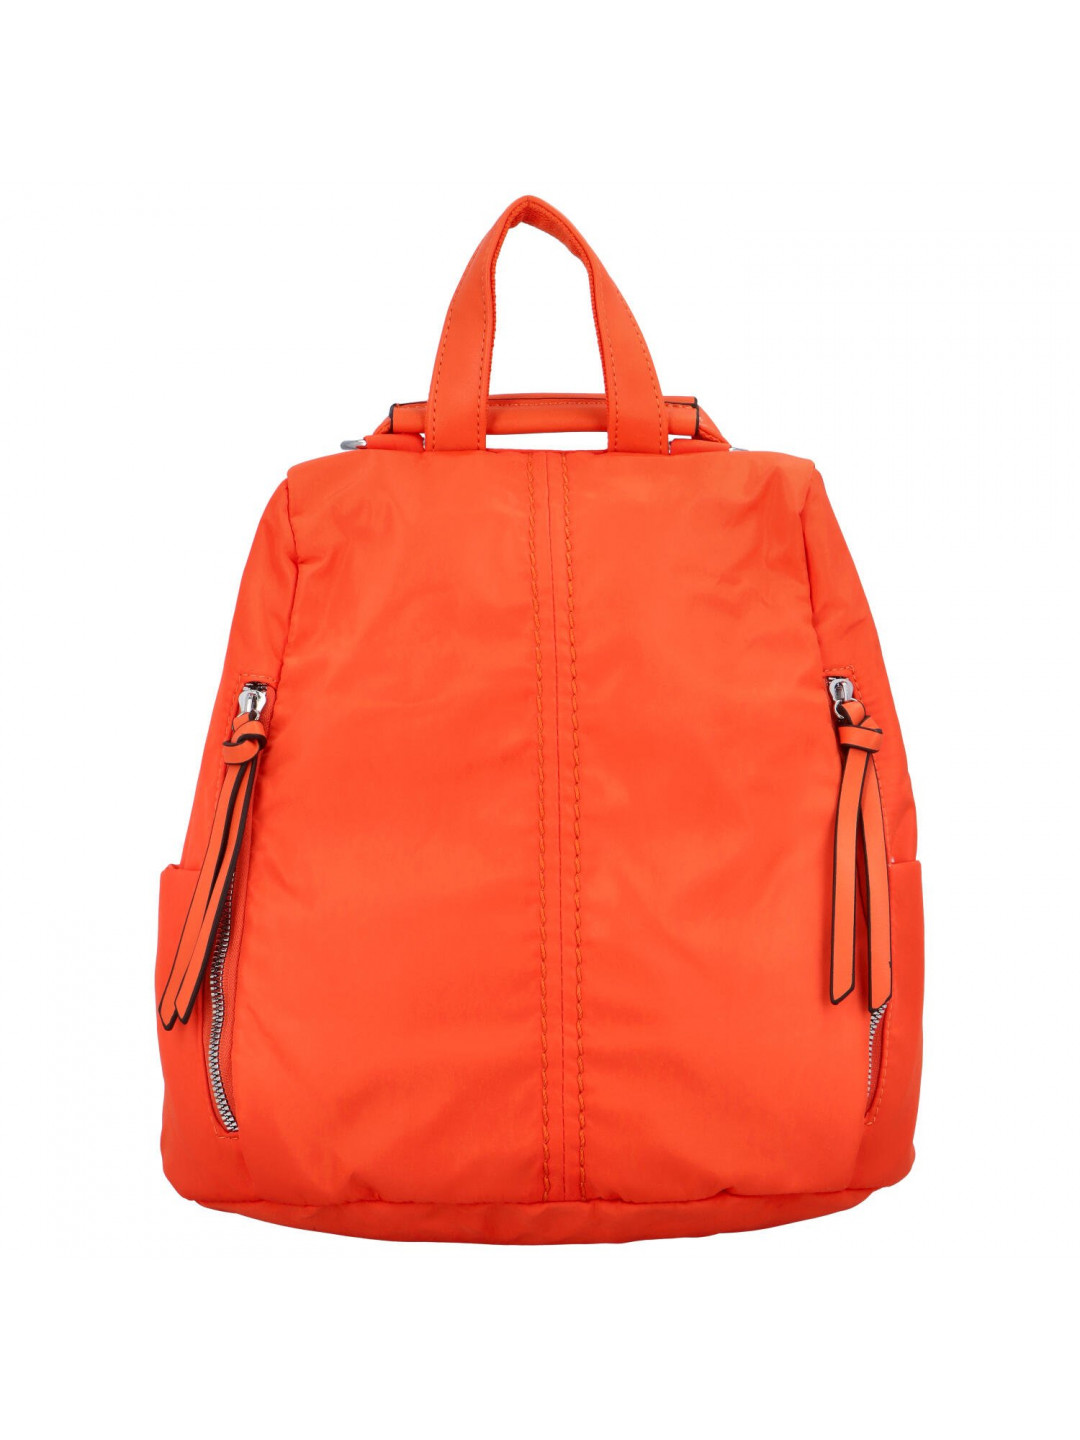 Dámský látkový batoh kabelka oranžový – Paolo Bags Myrtha